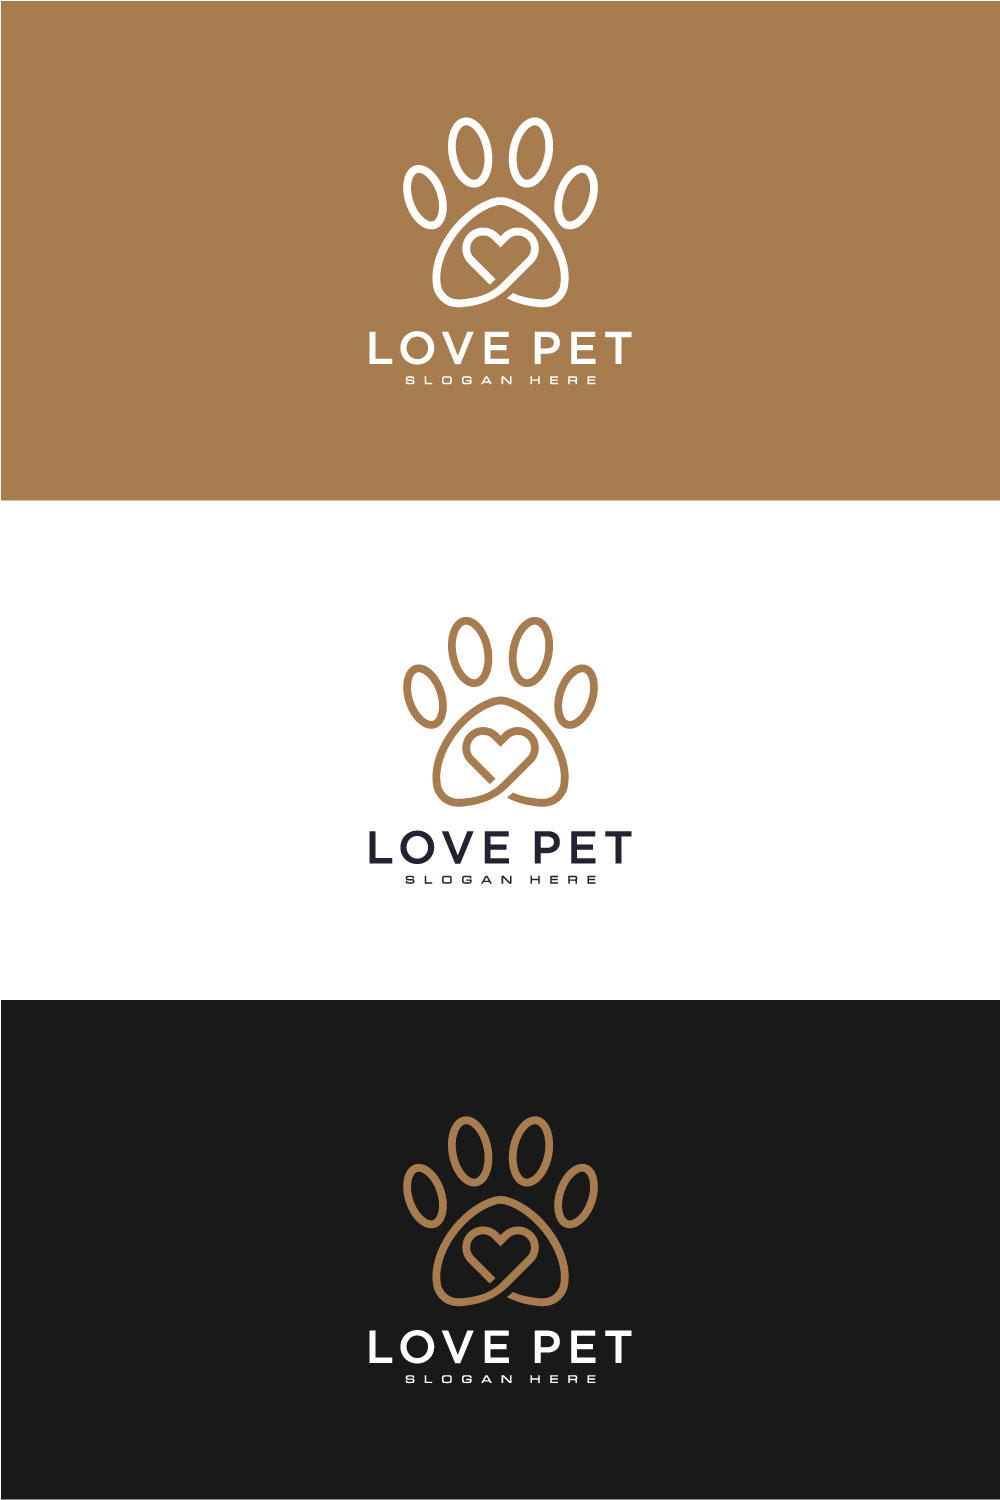 Love Pet Logo Vector Line Style pinterest image.